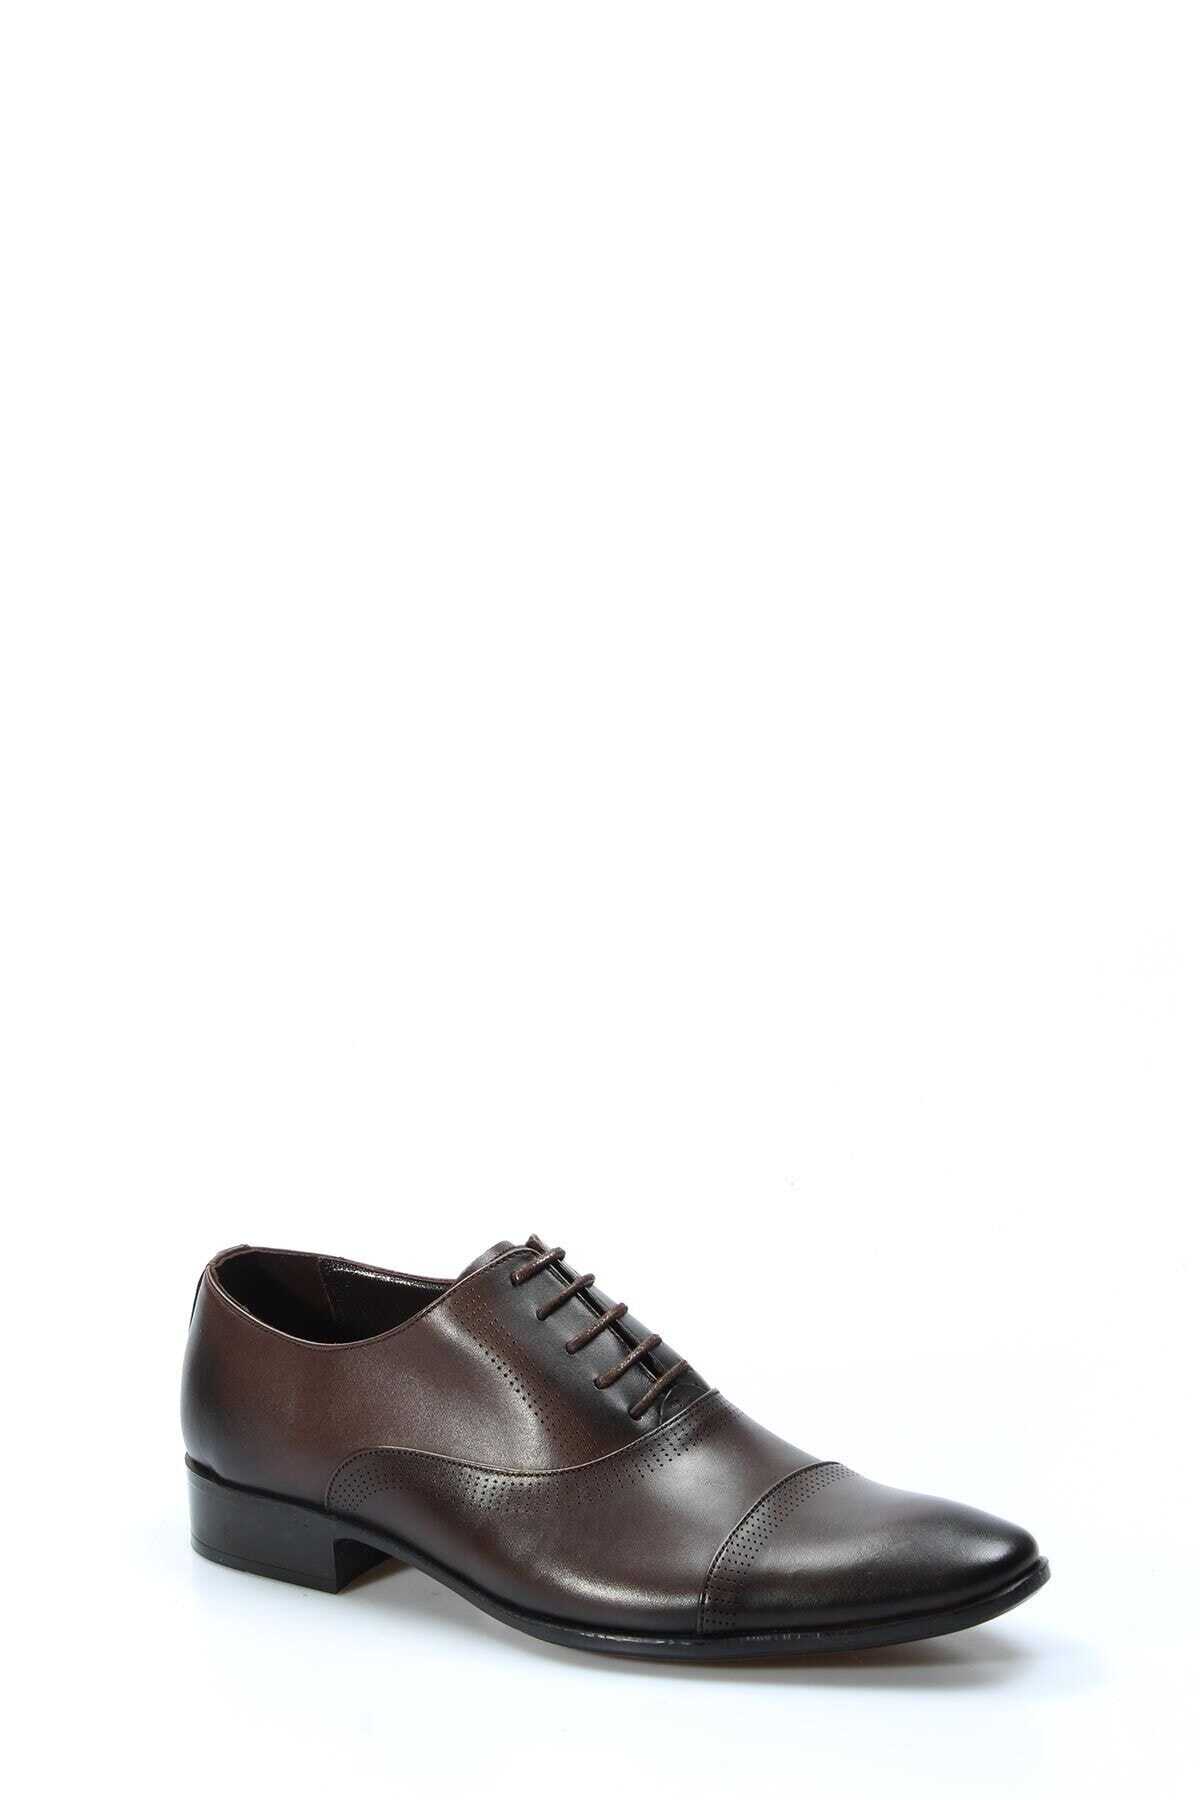 کفش کلاسیک چرم مردانه قهوه ای برند FAST STEP